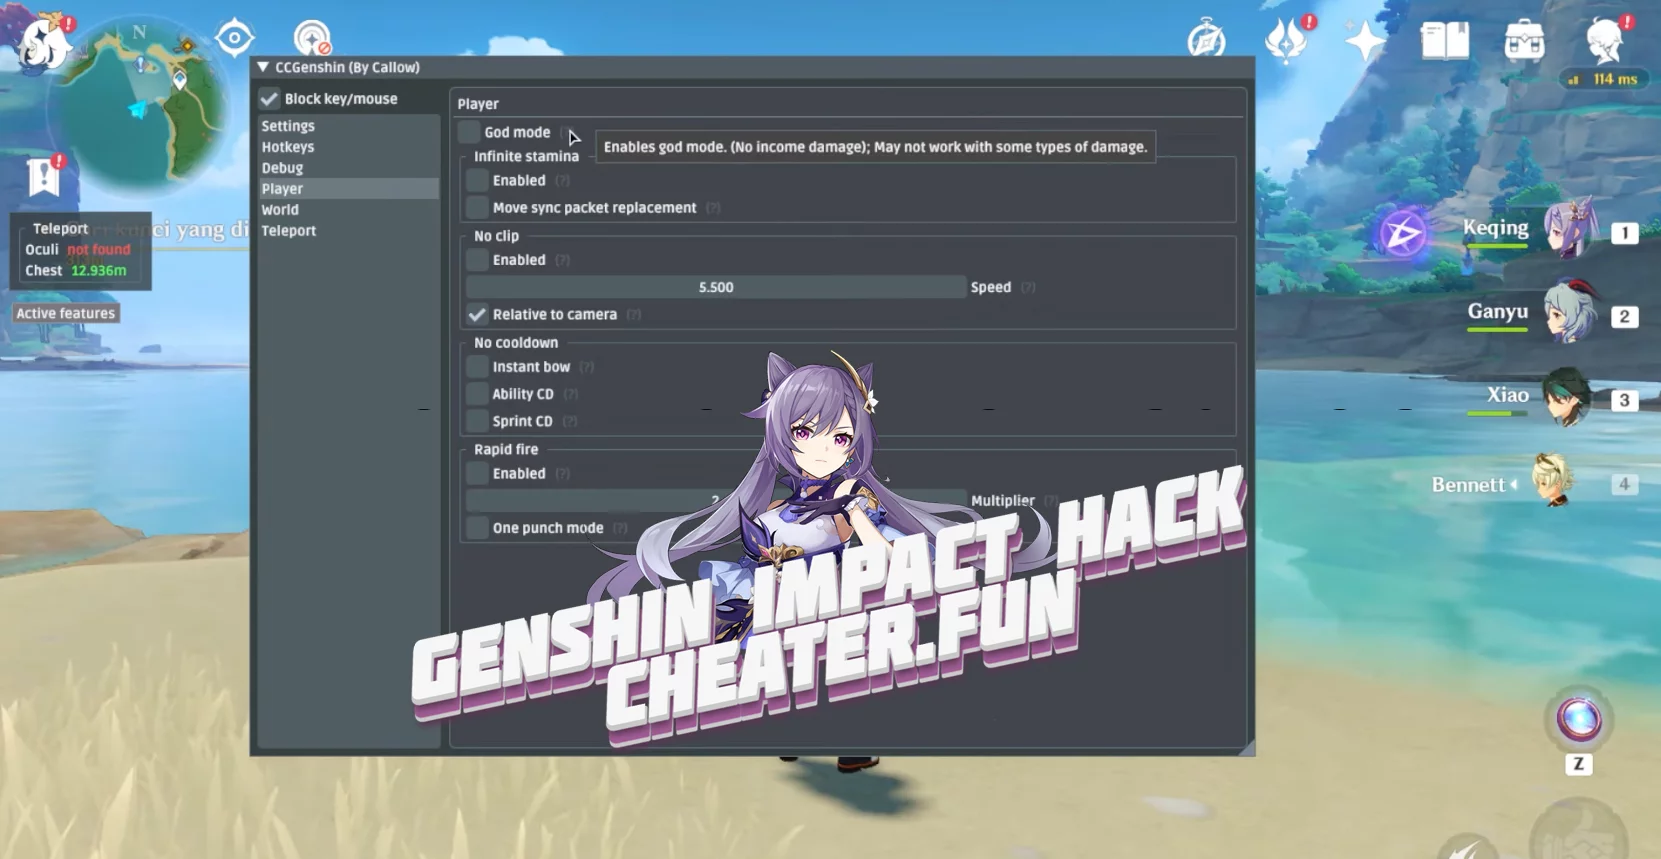 The Best Hack Genshin Impact  - GodMode, KillAura, RapidFire